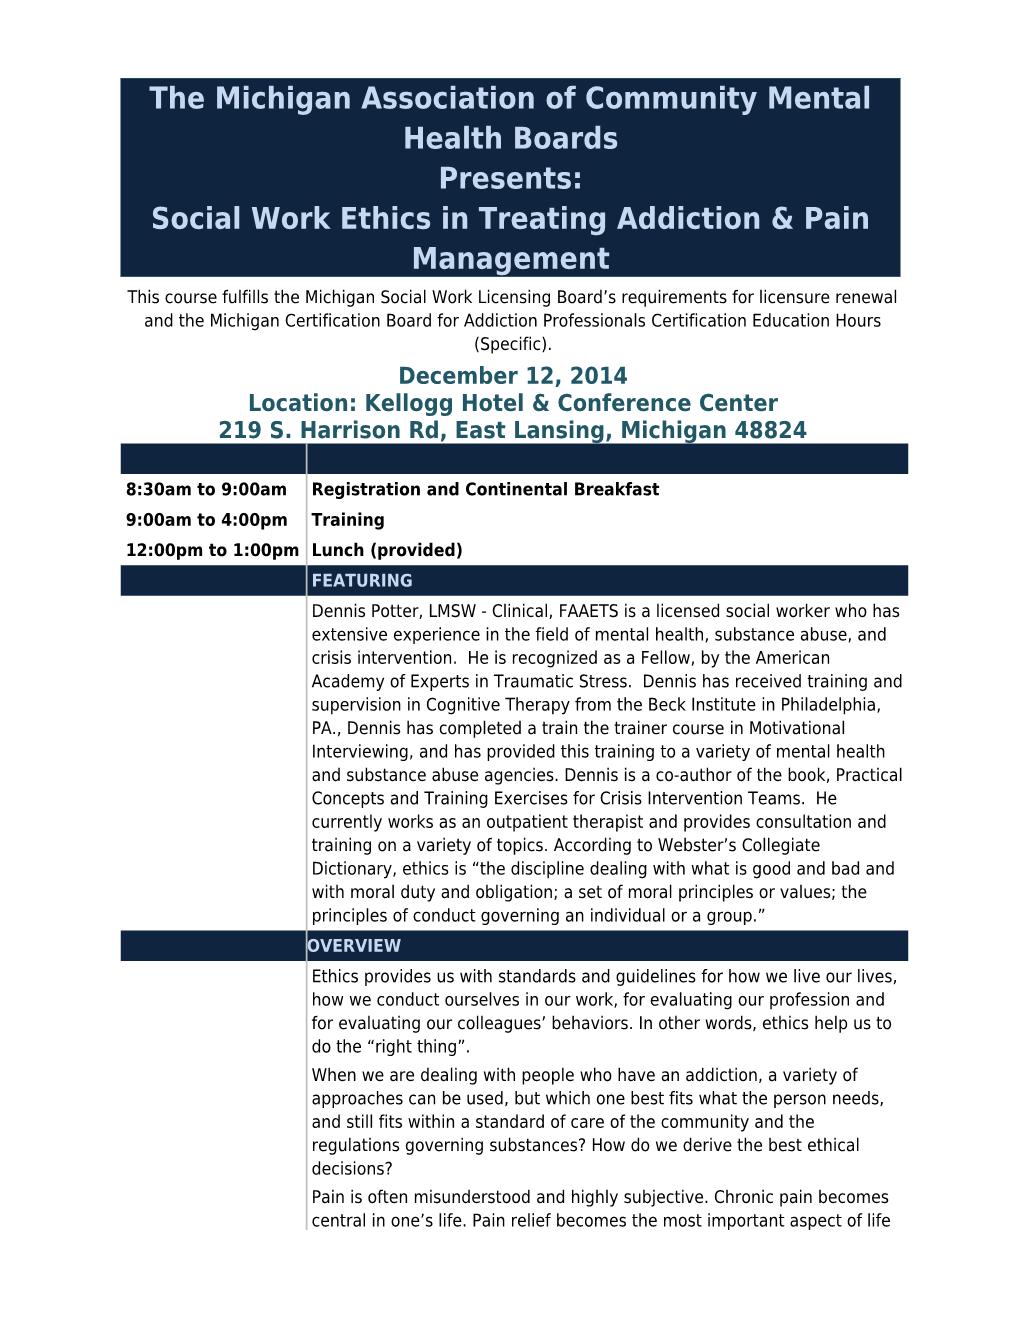 The Michigan Association of Community Mental Health Boardspresents:Social Work Ethics In